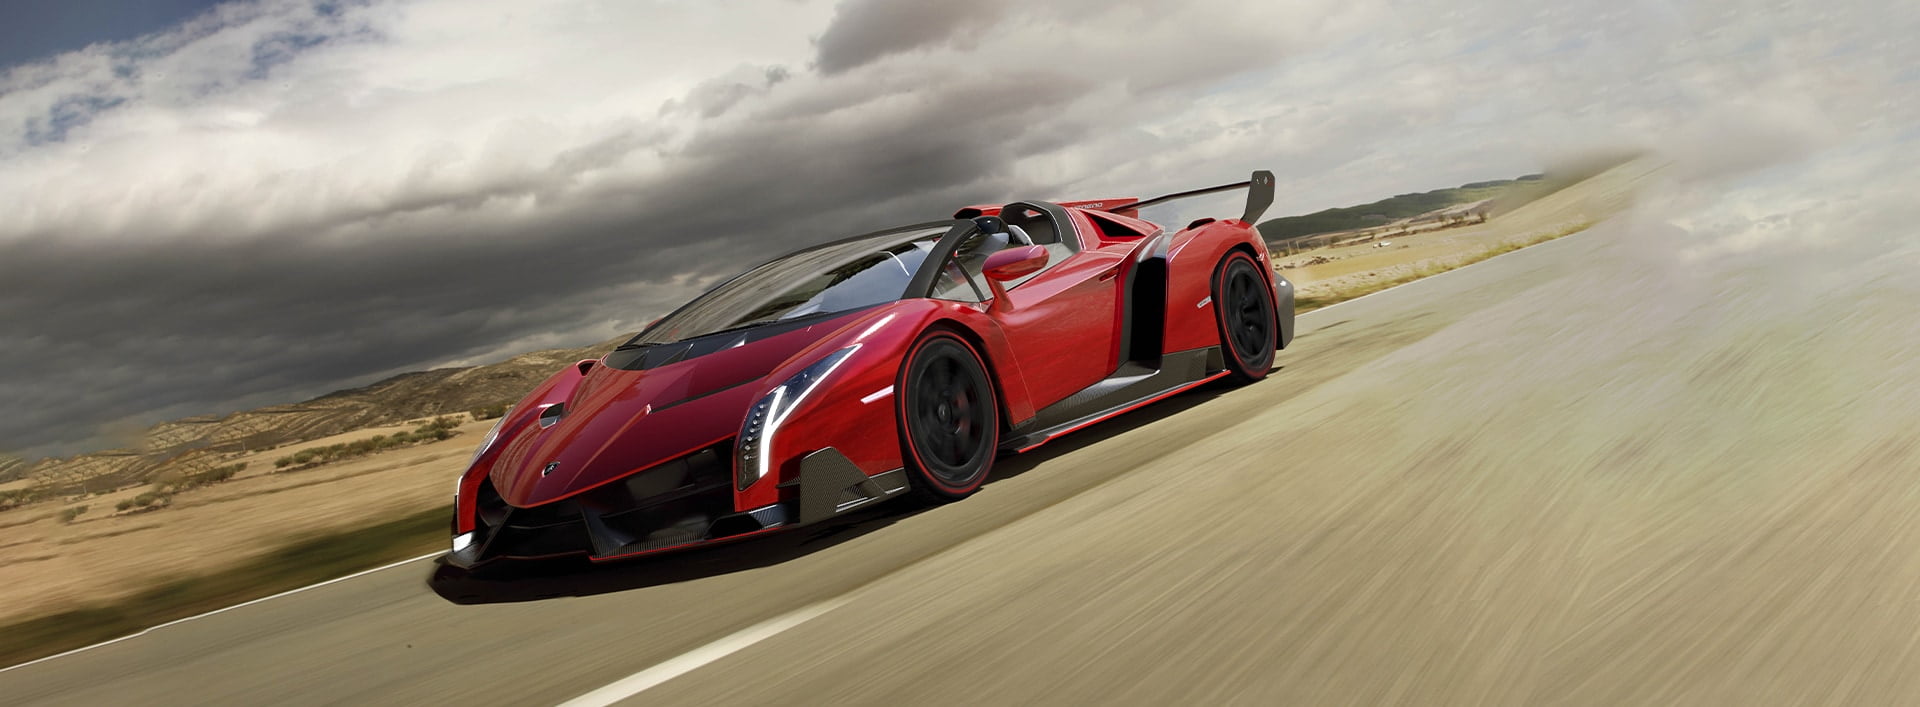 Lamborghini Veneno new red luxury